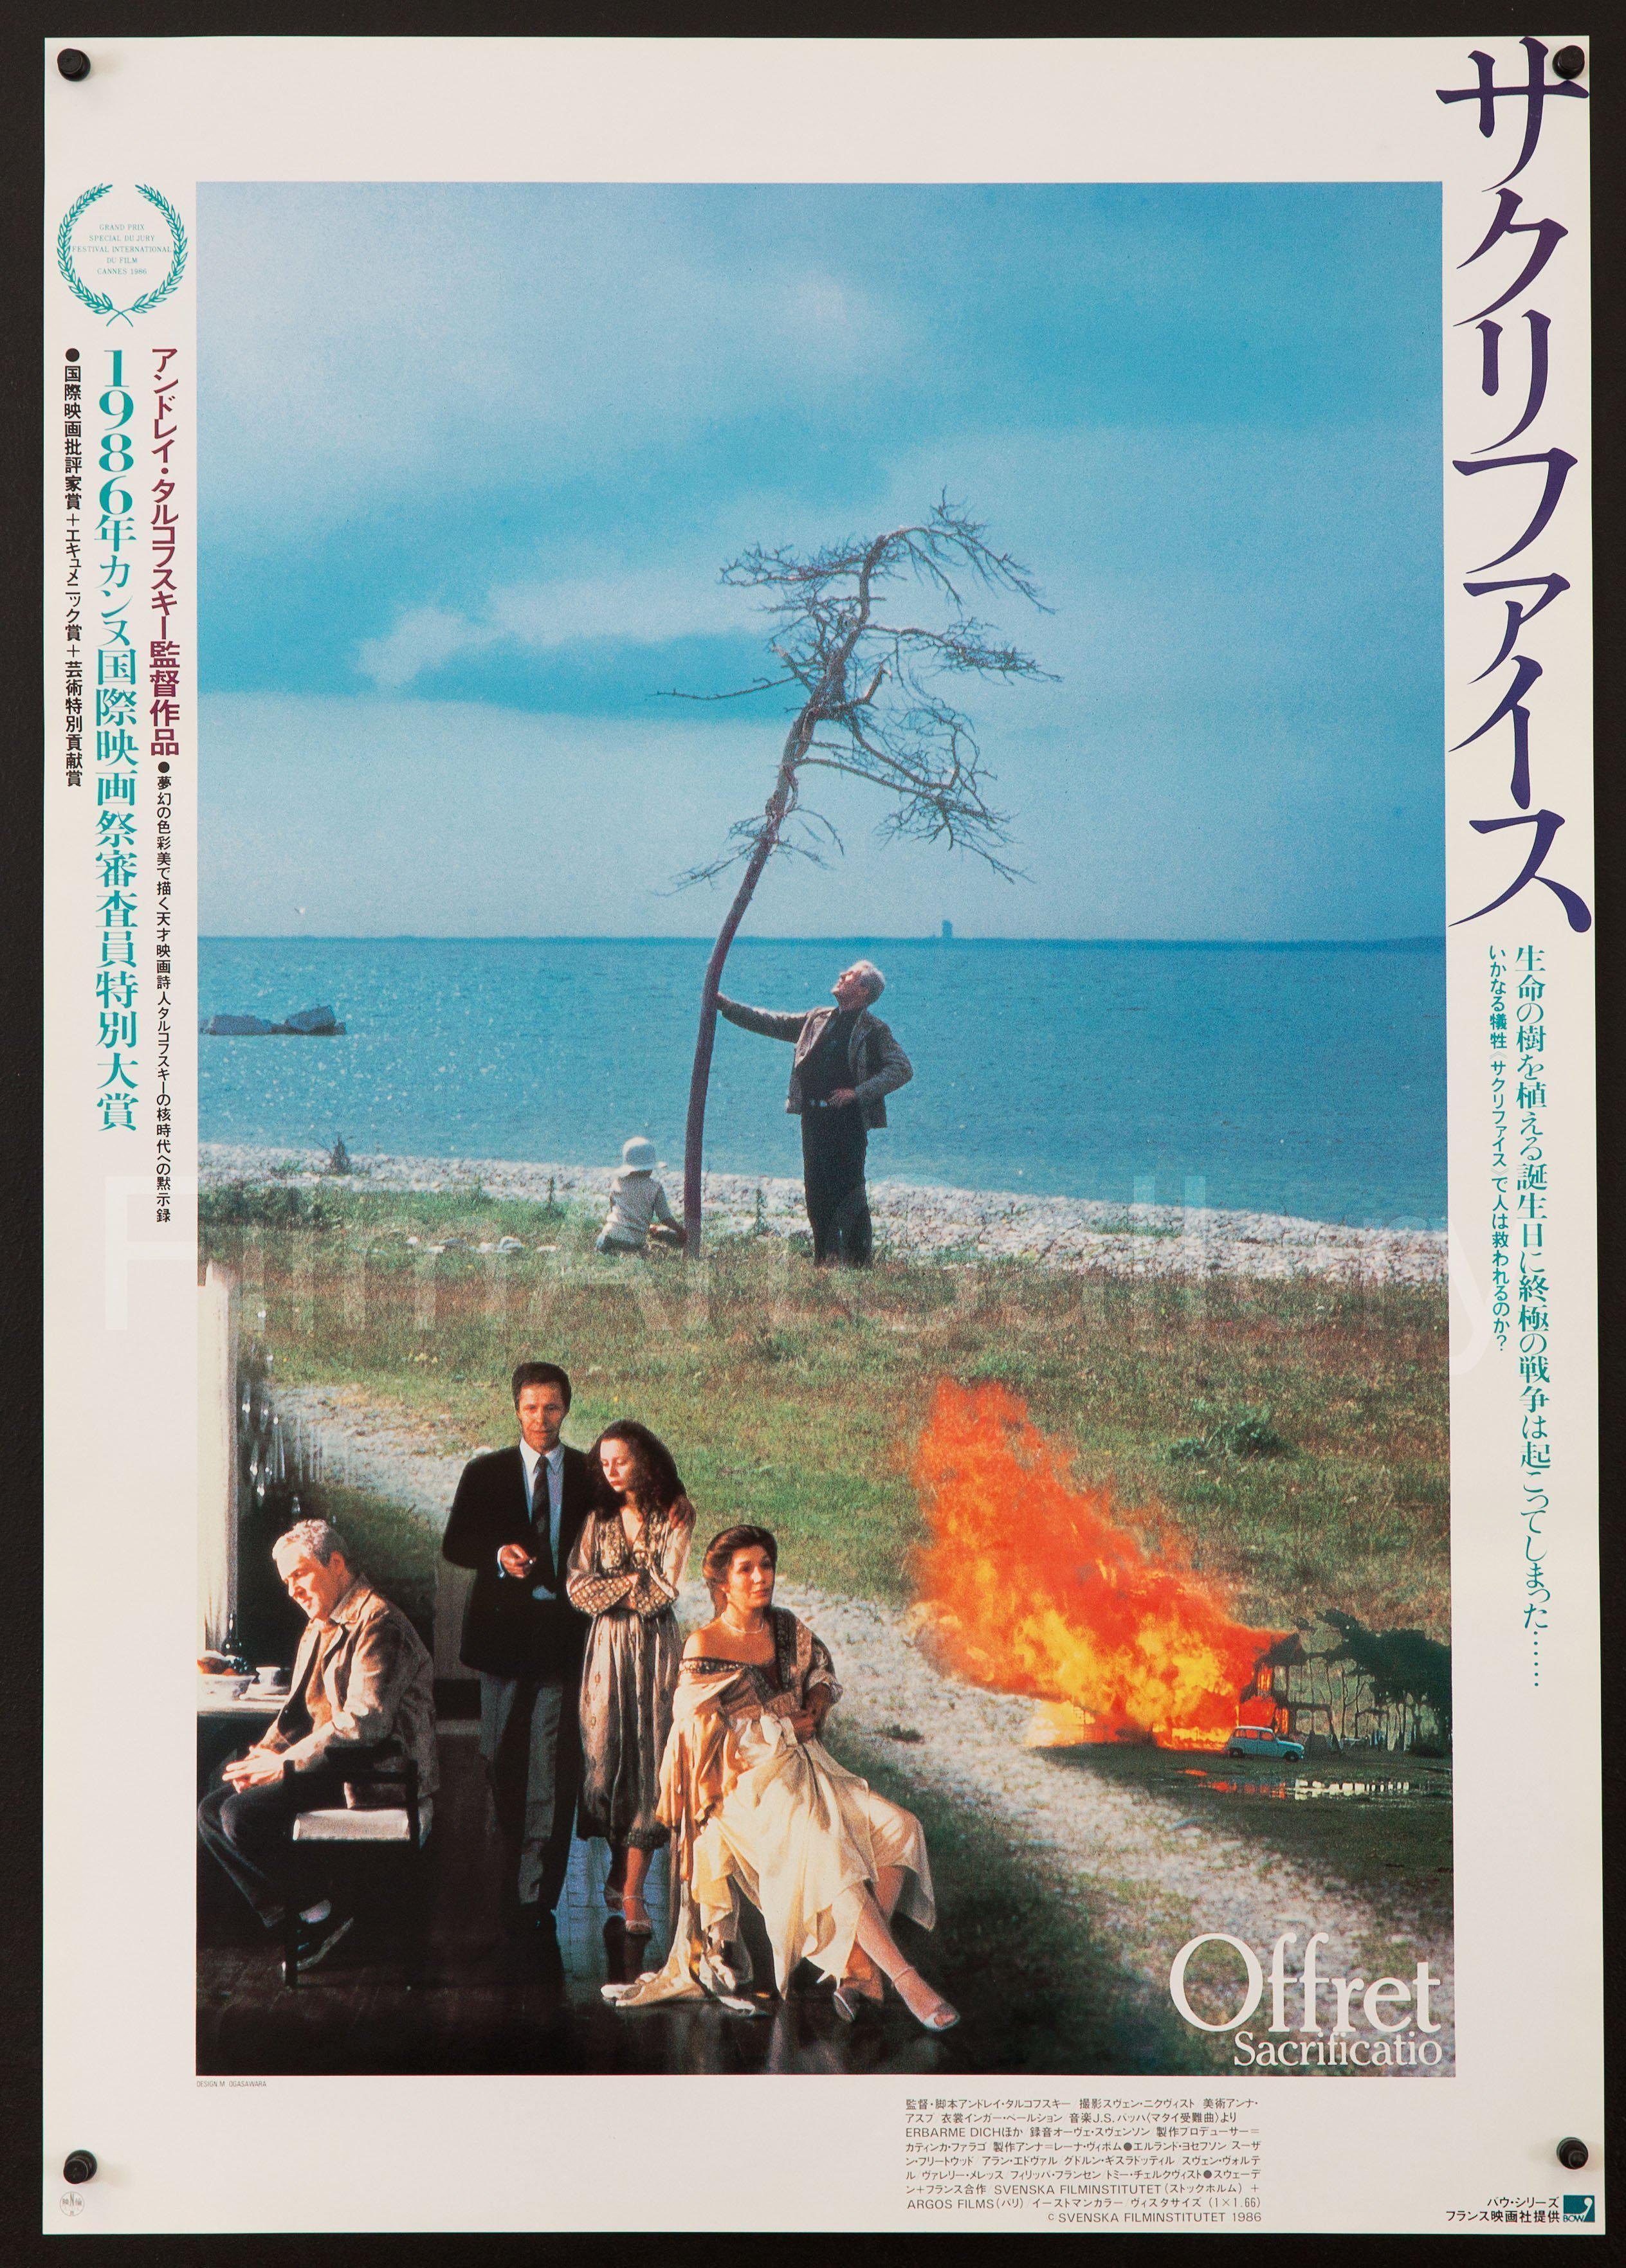 The Sacrifice Offret Movie Poster Japanese 1 Panel x29 Original Vintage Movie Poster 8077